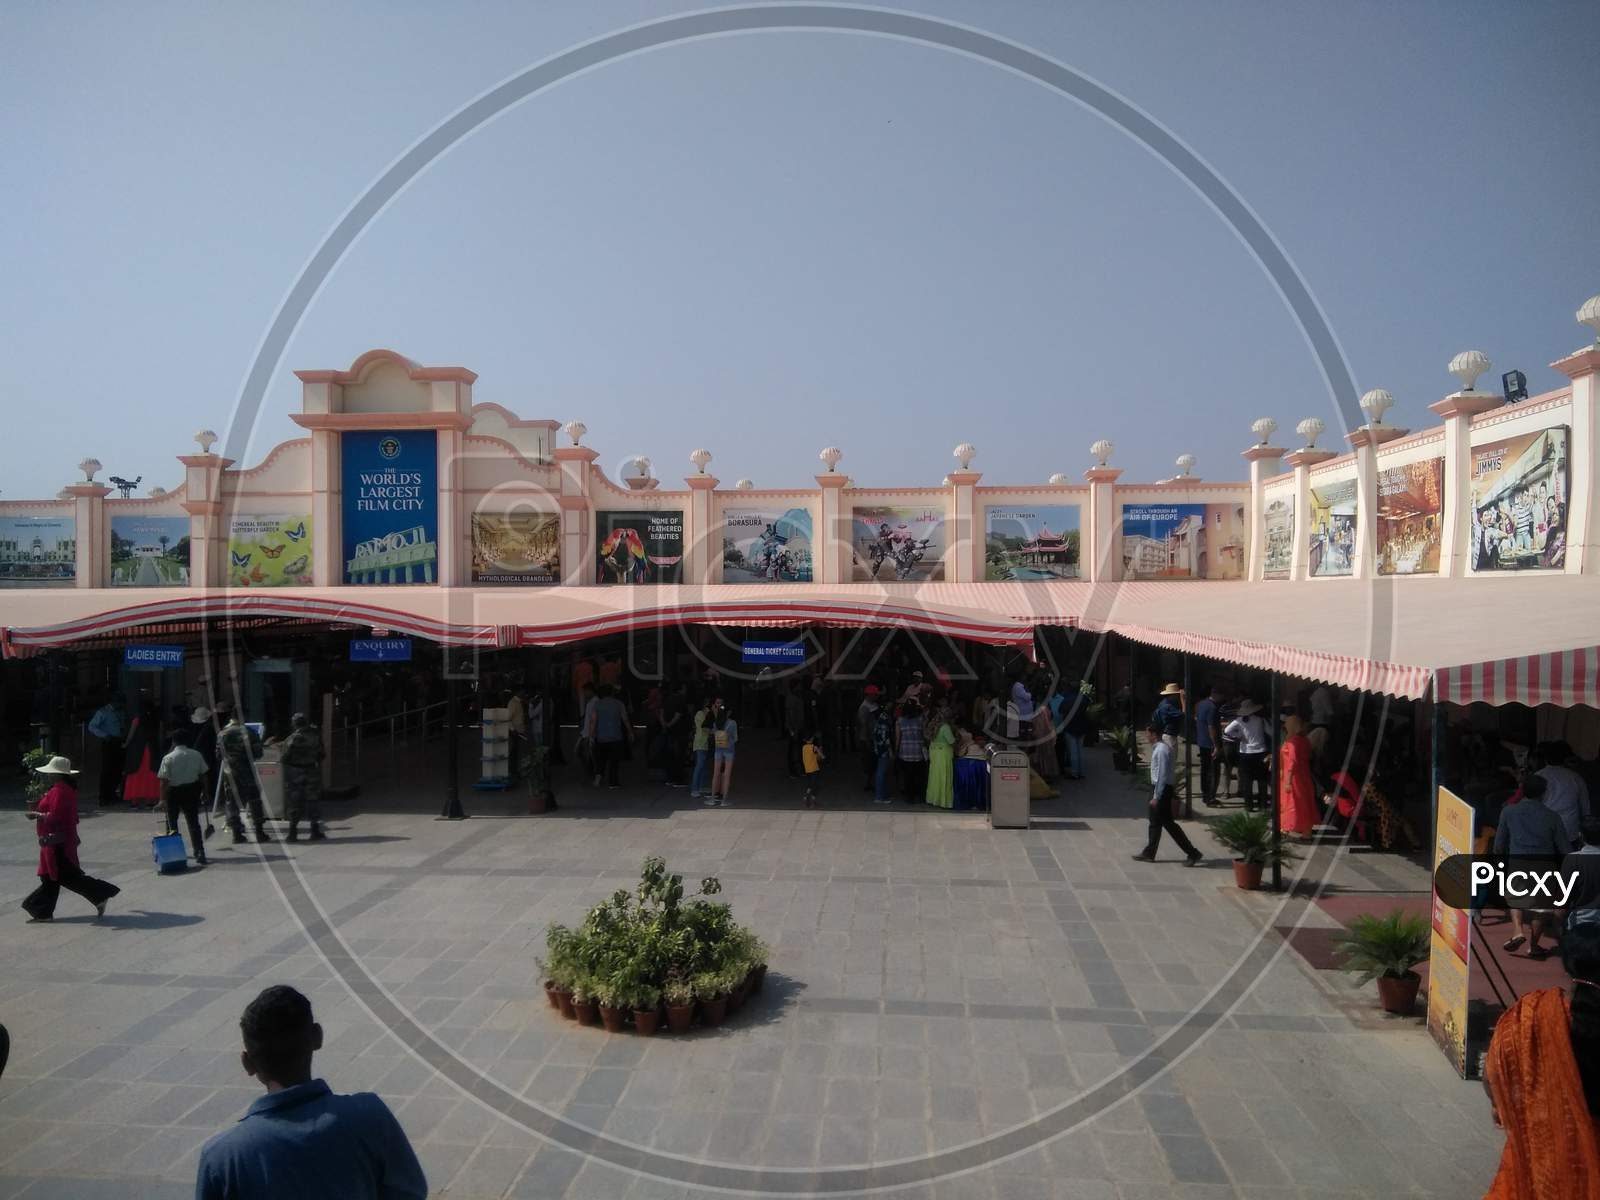 Ramoji film city Hyderabad, India